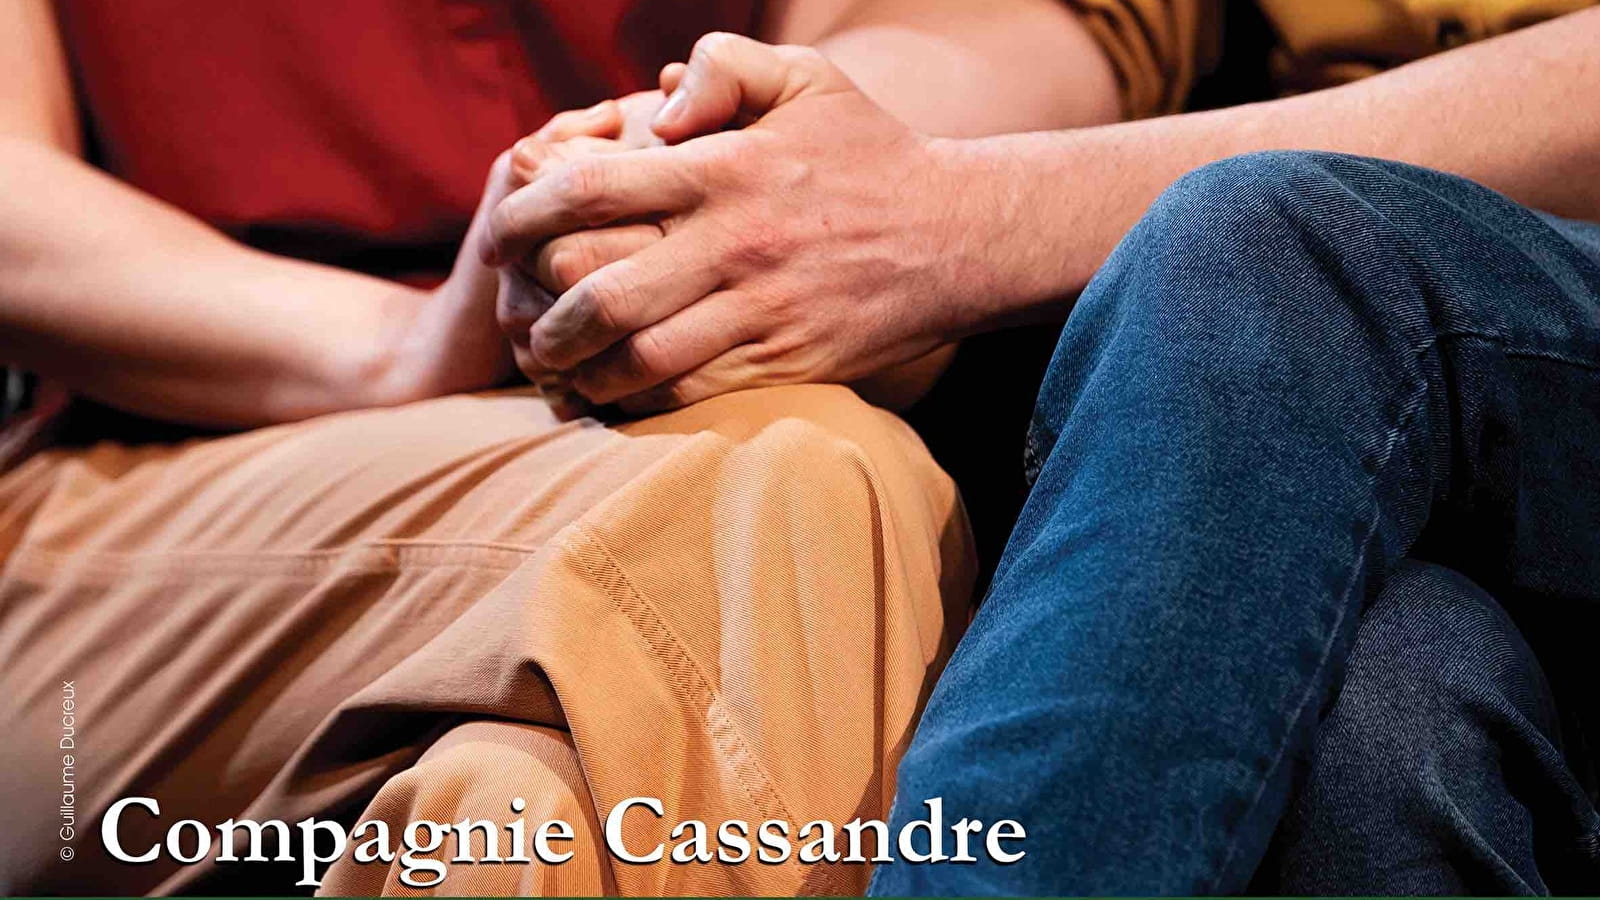 Love me - Compagnie Cassandre